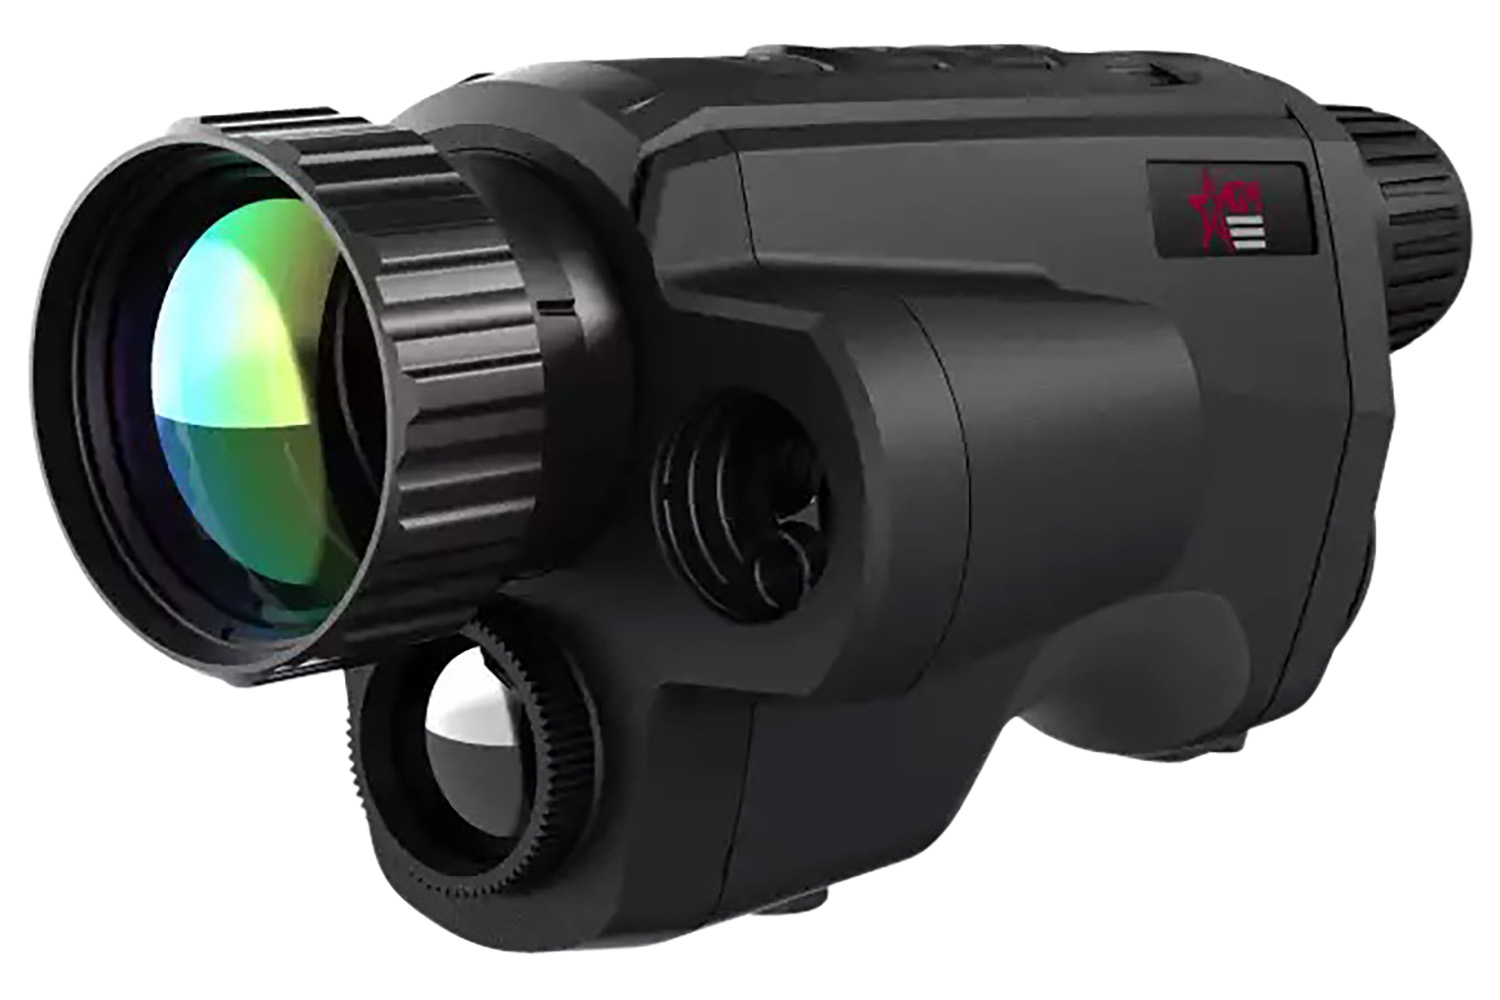 AGM Global Vision 7142510001306FL6 Fuzion LRF TM50-640 Thermal Monocular Black 3-24x 50mm 640x512, 50 Hz Resolution Zoom 1x/2x/4x/8x Features Laser Rangefinder